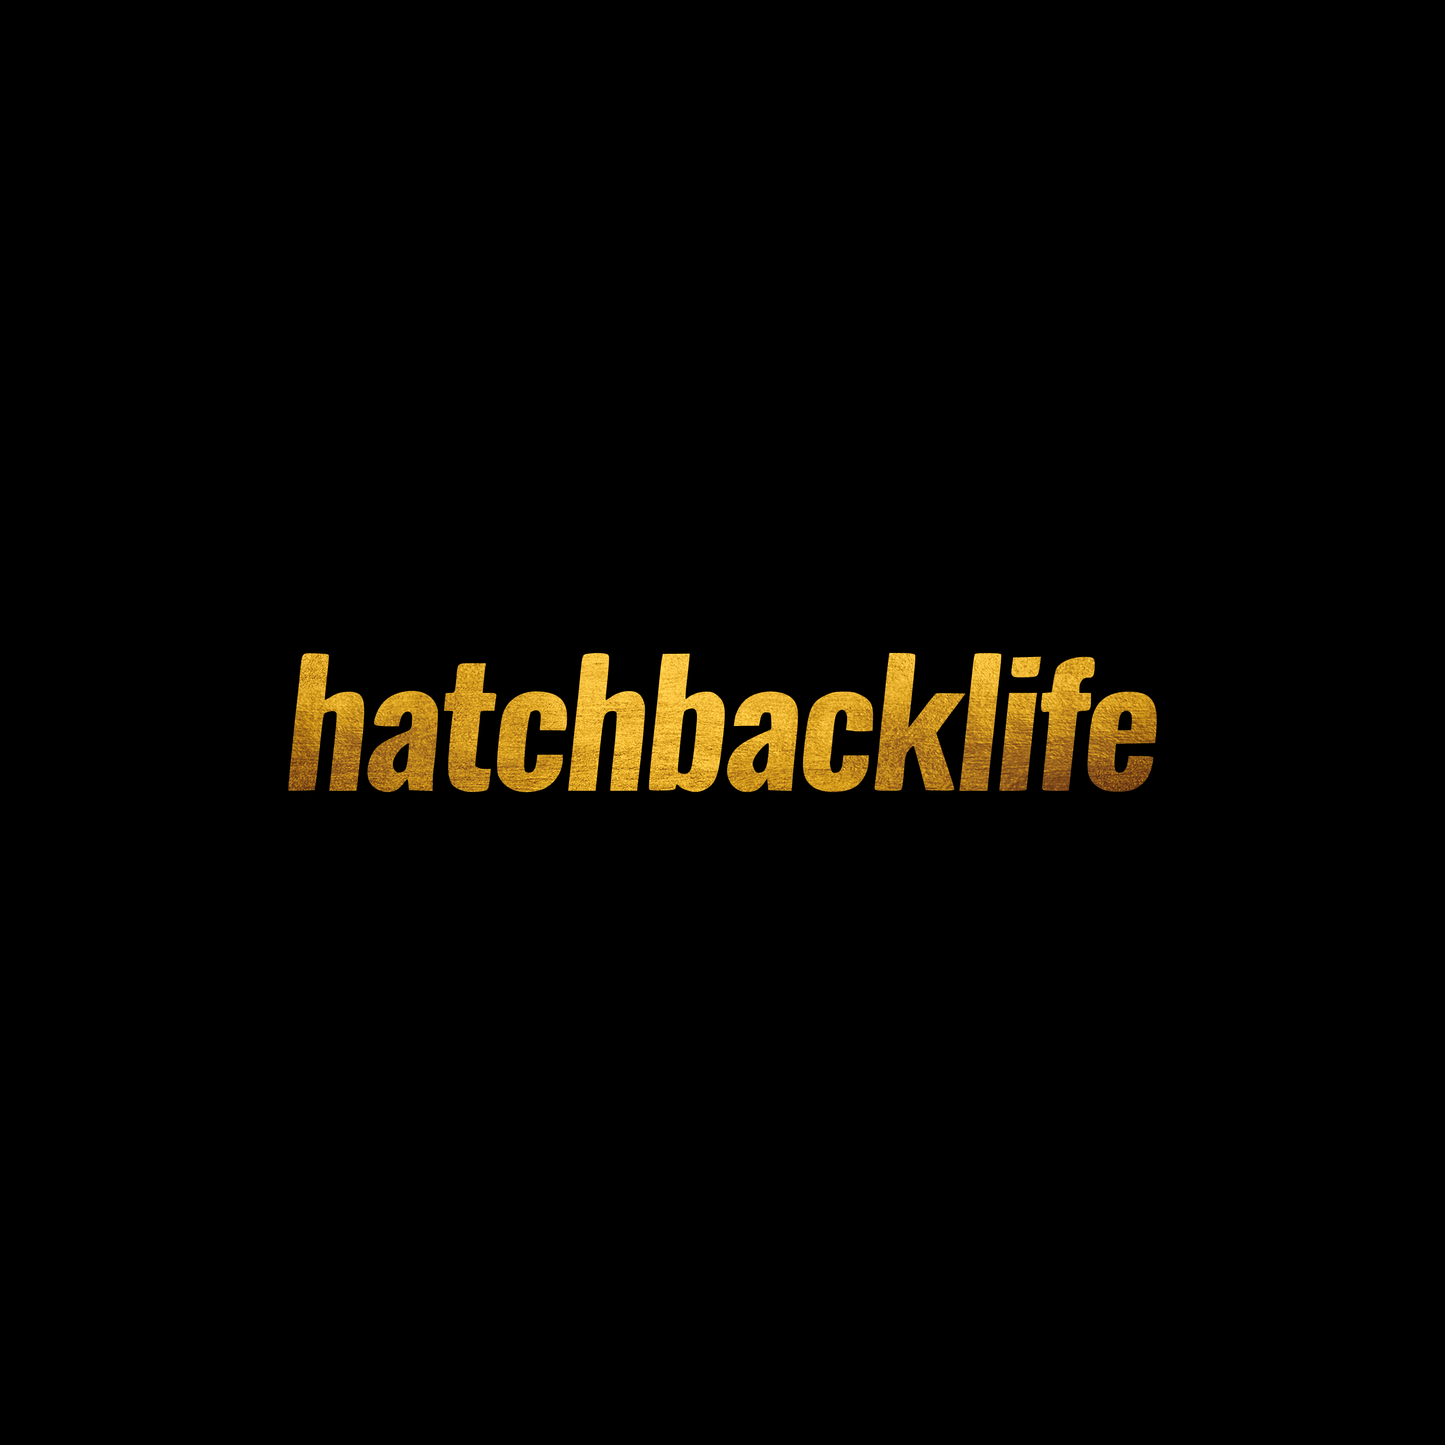 Hatchback life sticker decal